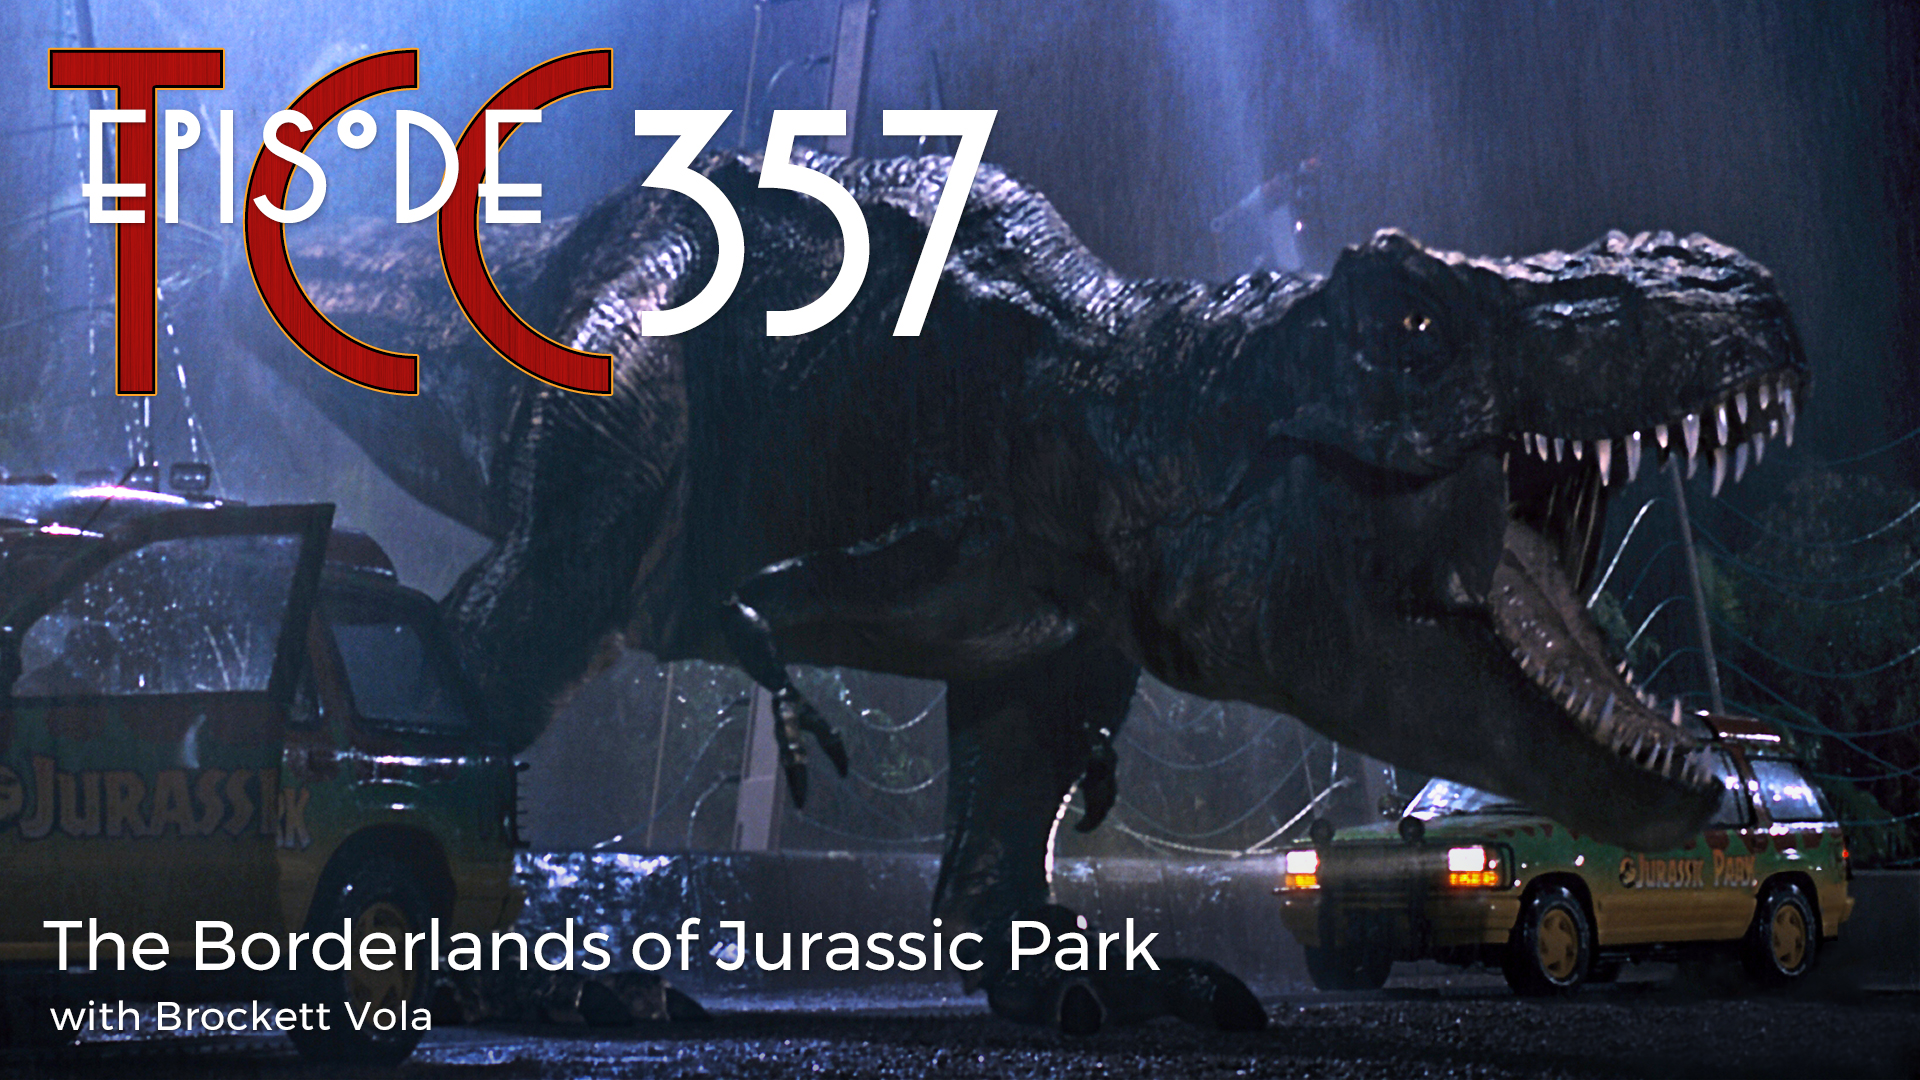 The Citadel Cafe 357: The Borderlands of Jurassic Park